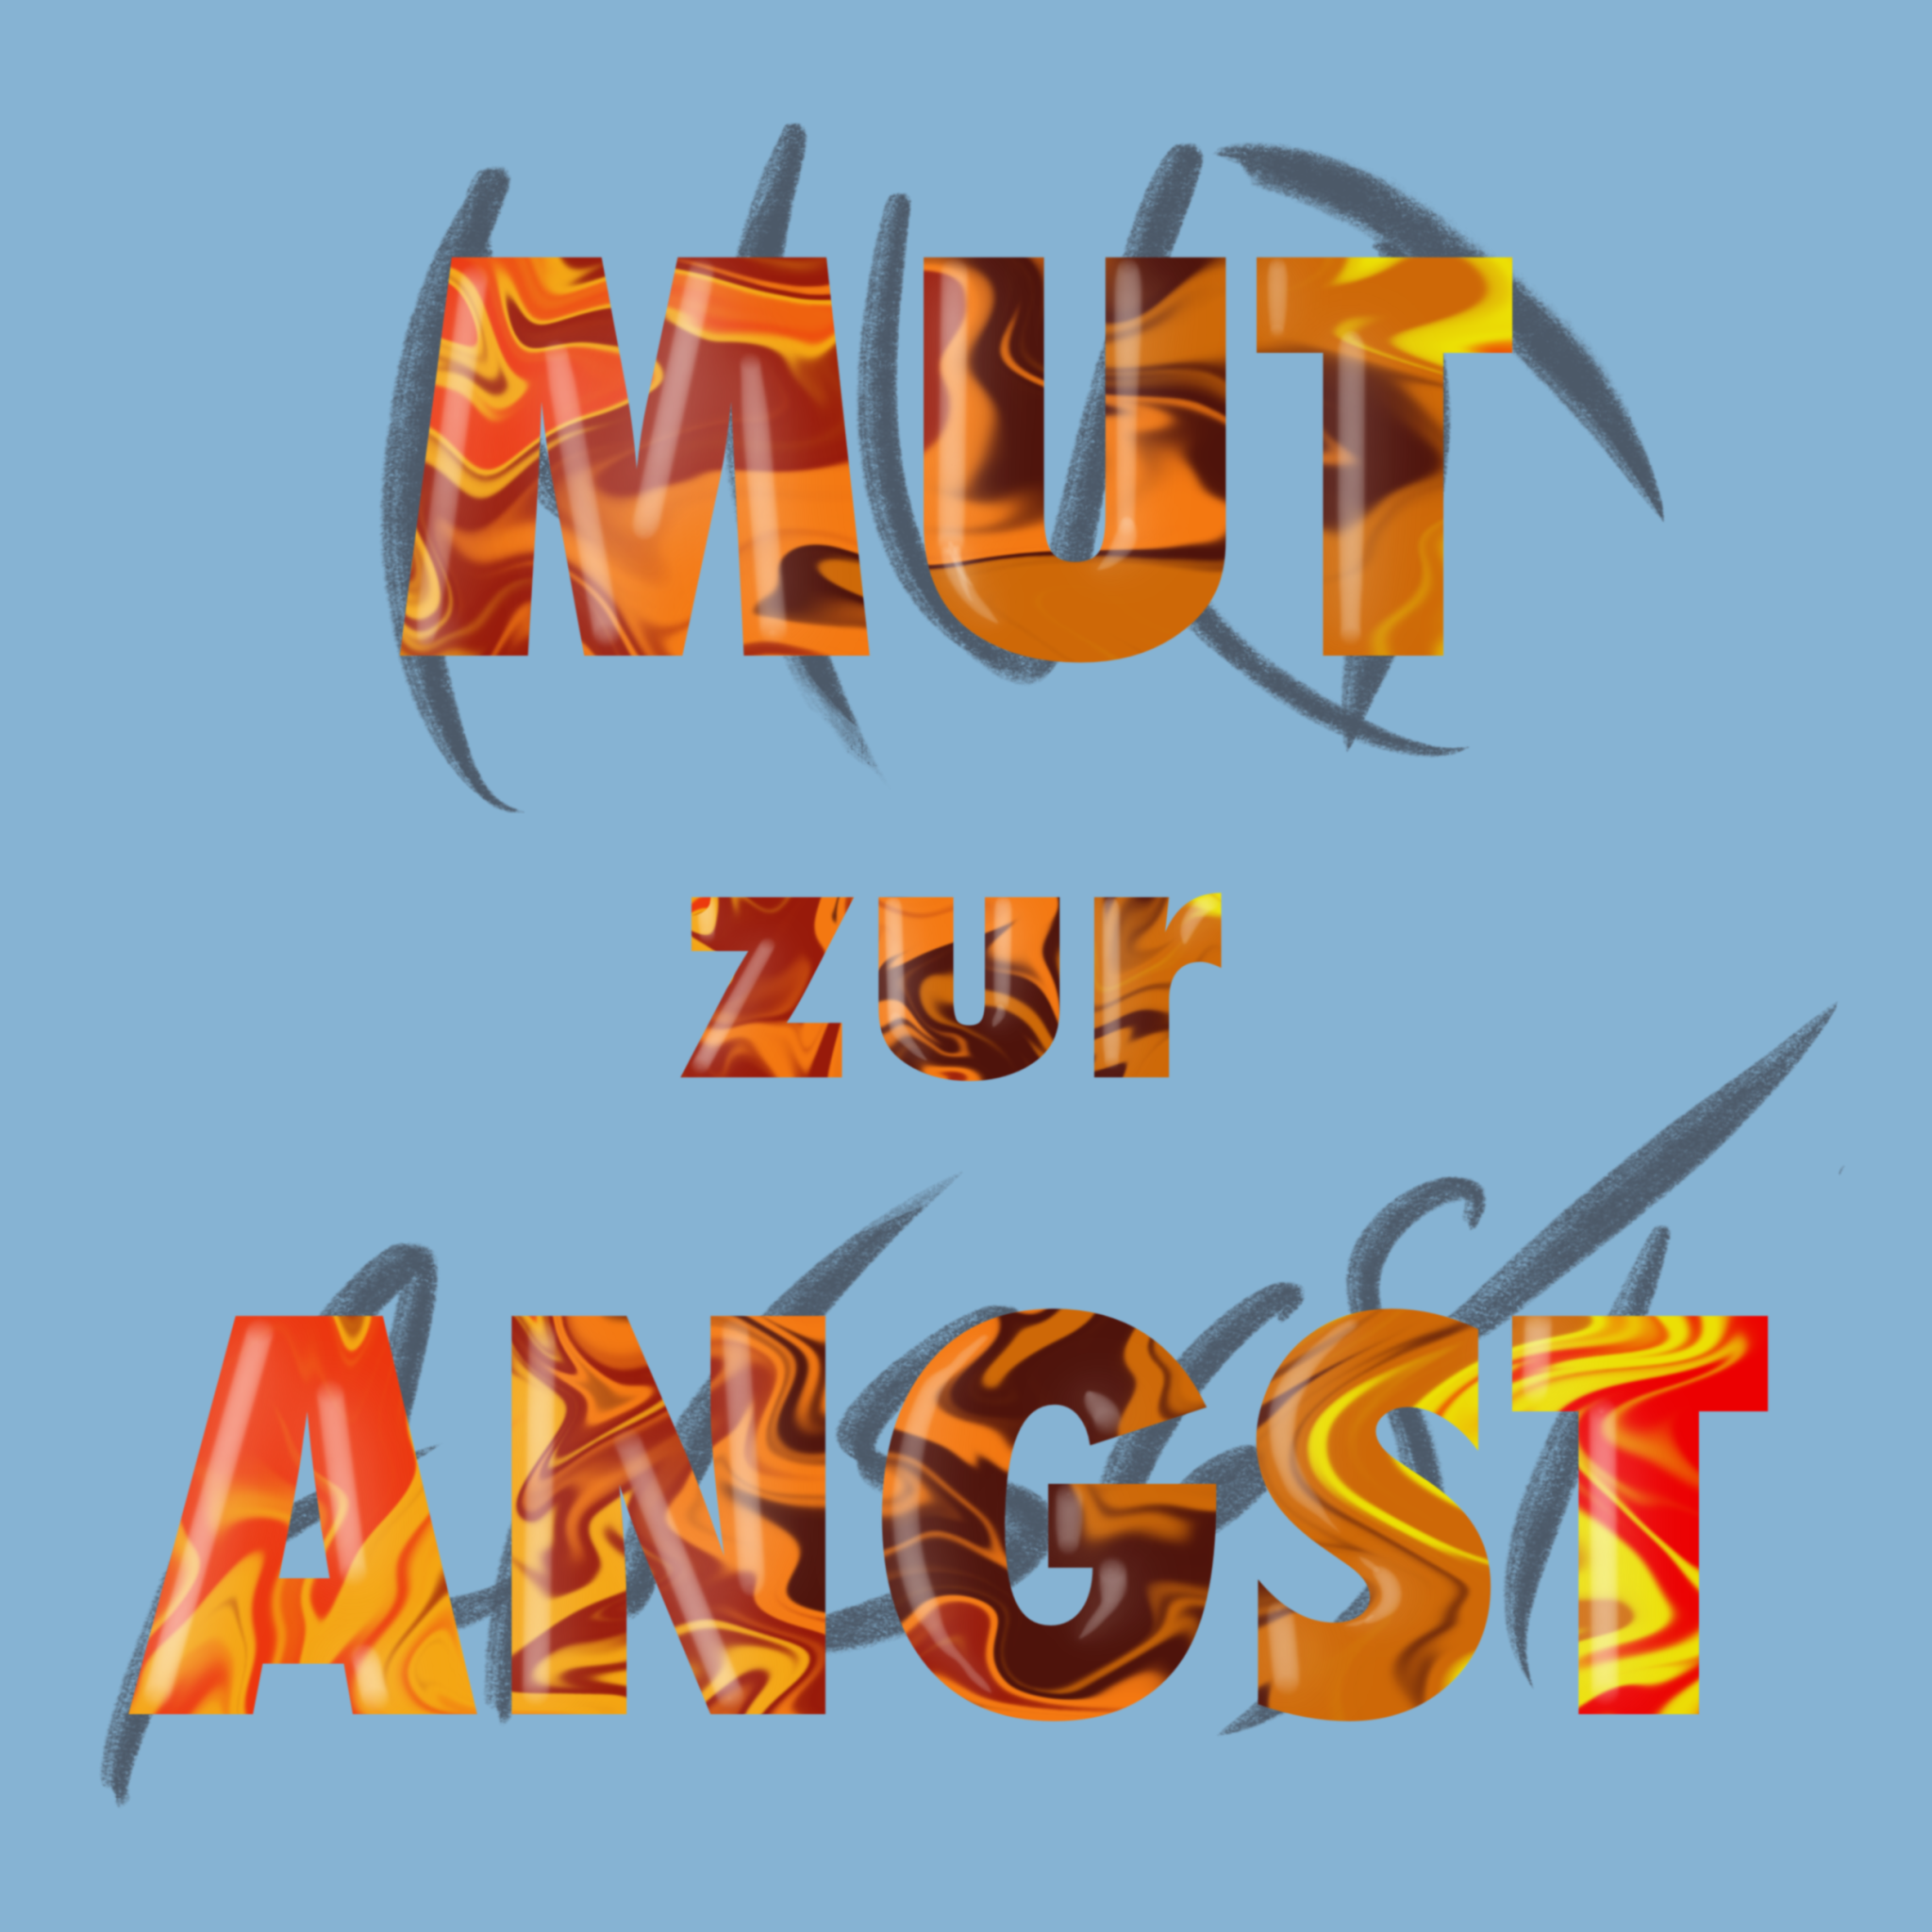 mut-zur-angst-2048x2048